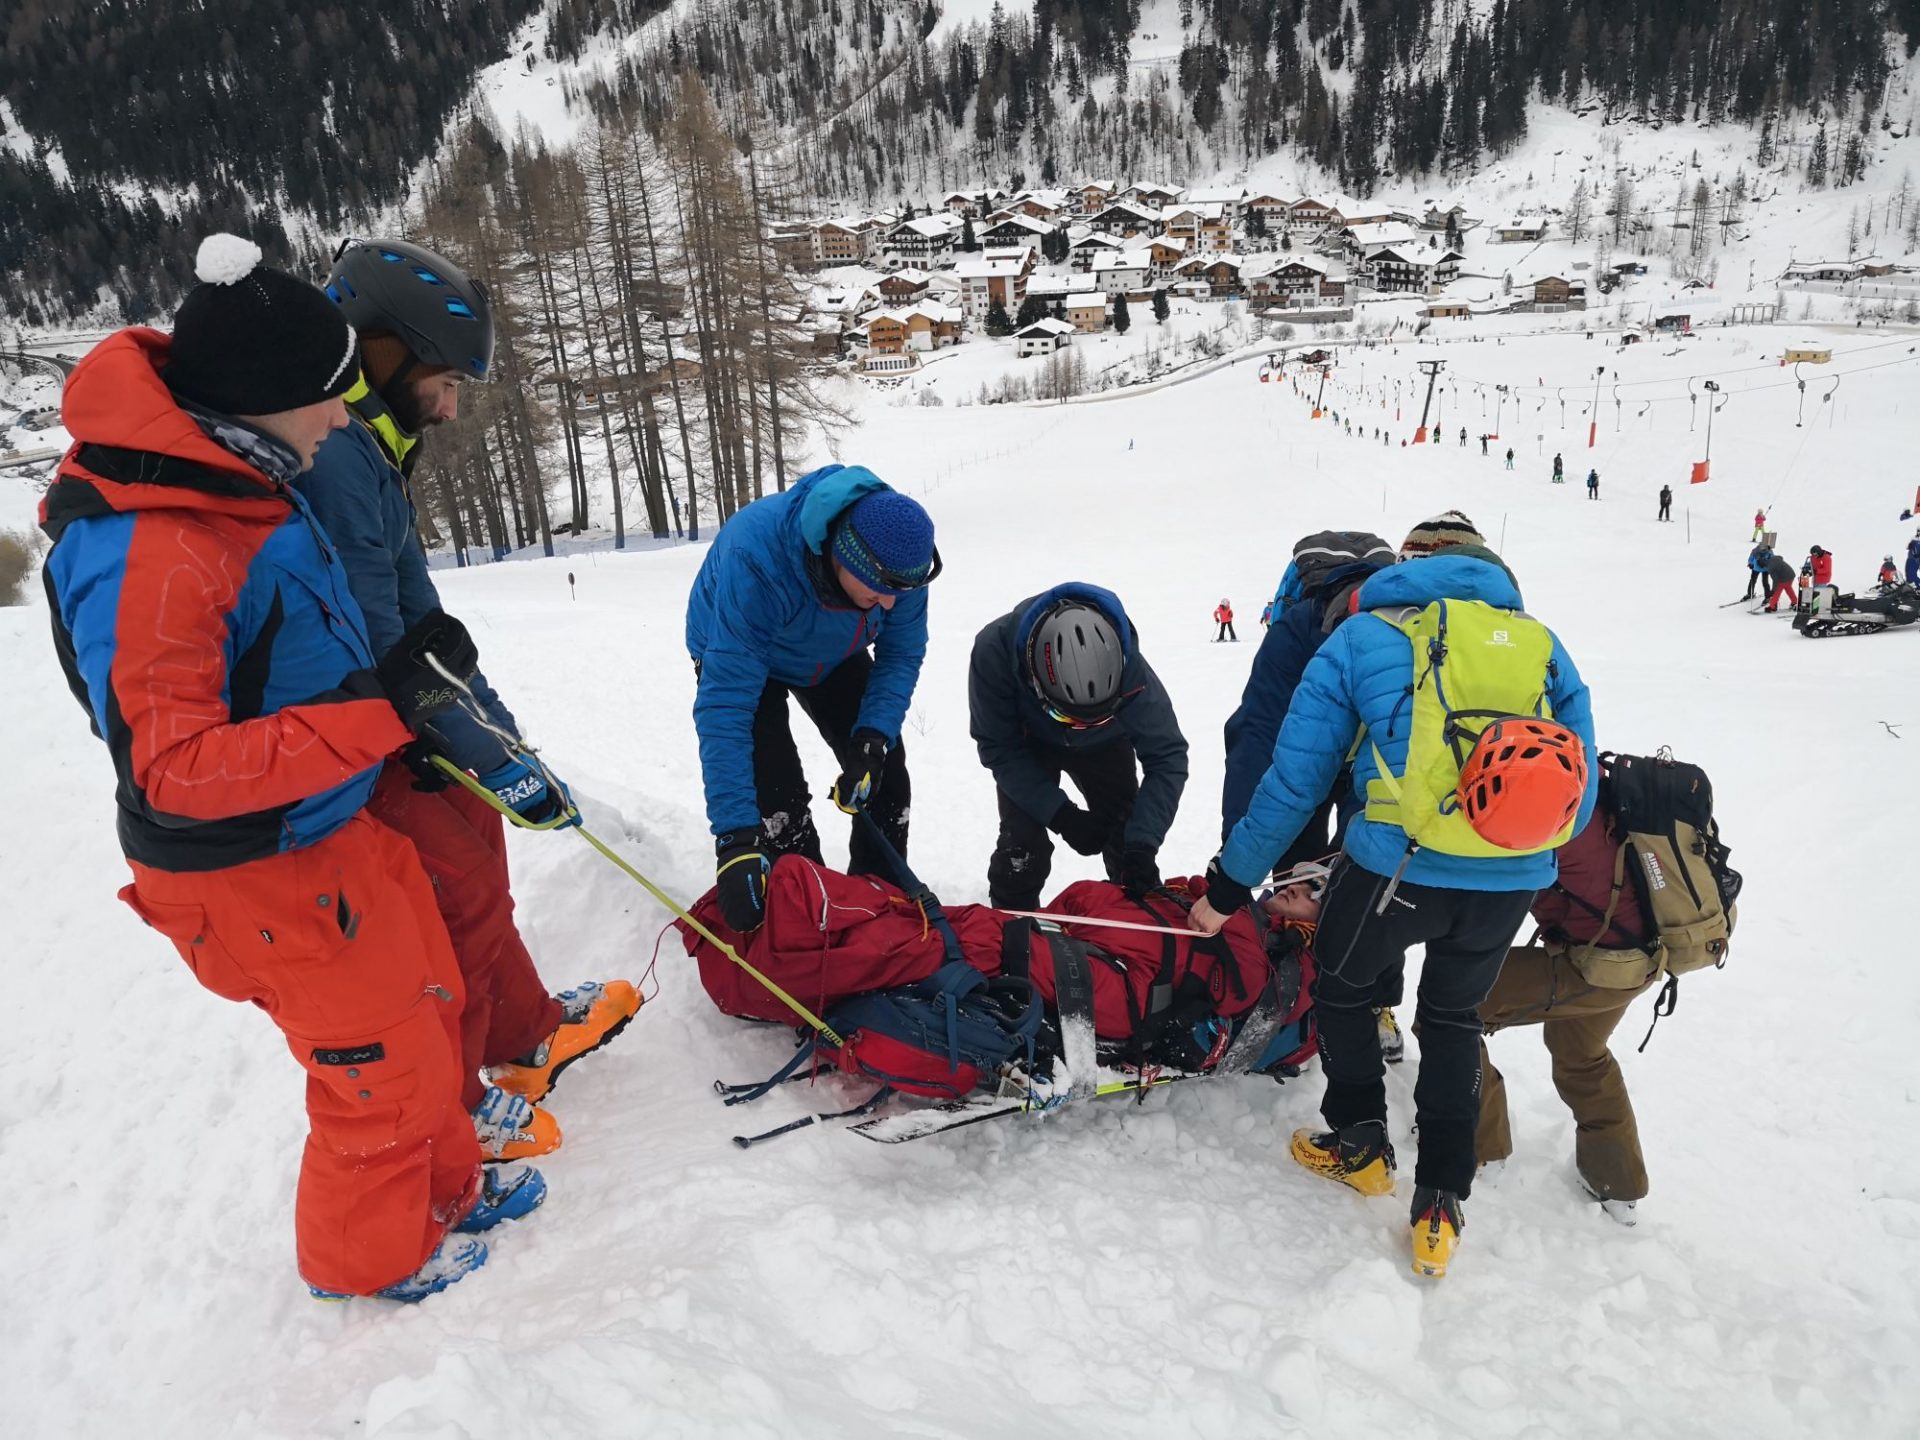 Bergsteigertipp: Skischlitten & Biwacksack-Verschnürung